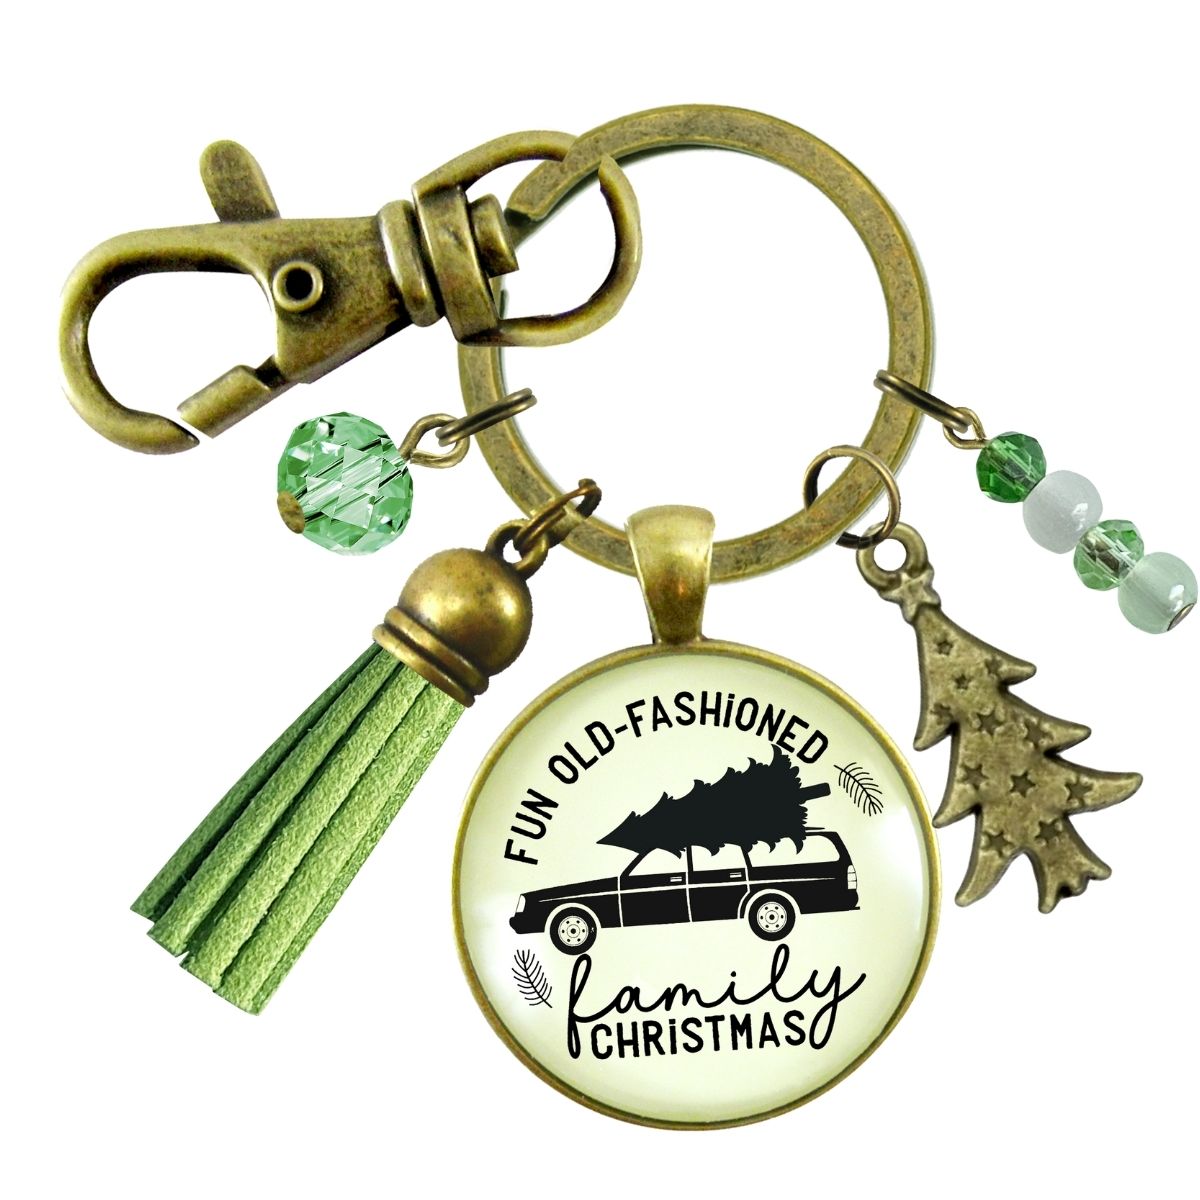 Family Christmas Keychain Fun Old Fashioned Holiday Tree Charm Handmade Car Tree Farm Pendant Green Tassel Key Chain   - Gutsy Goodness Handmade Jewelry